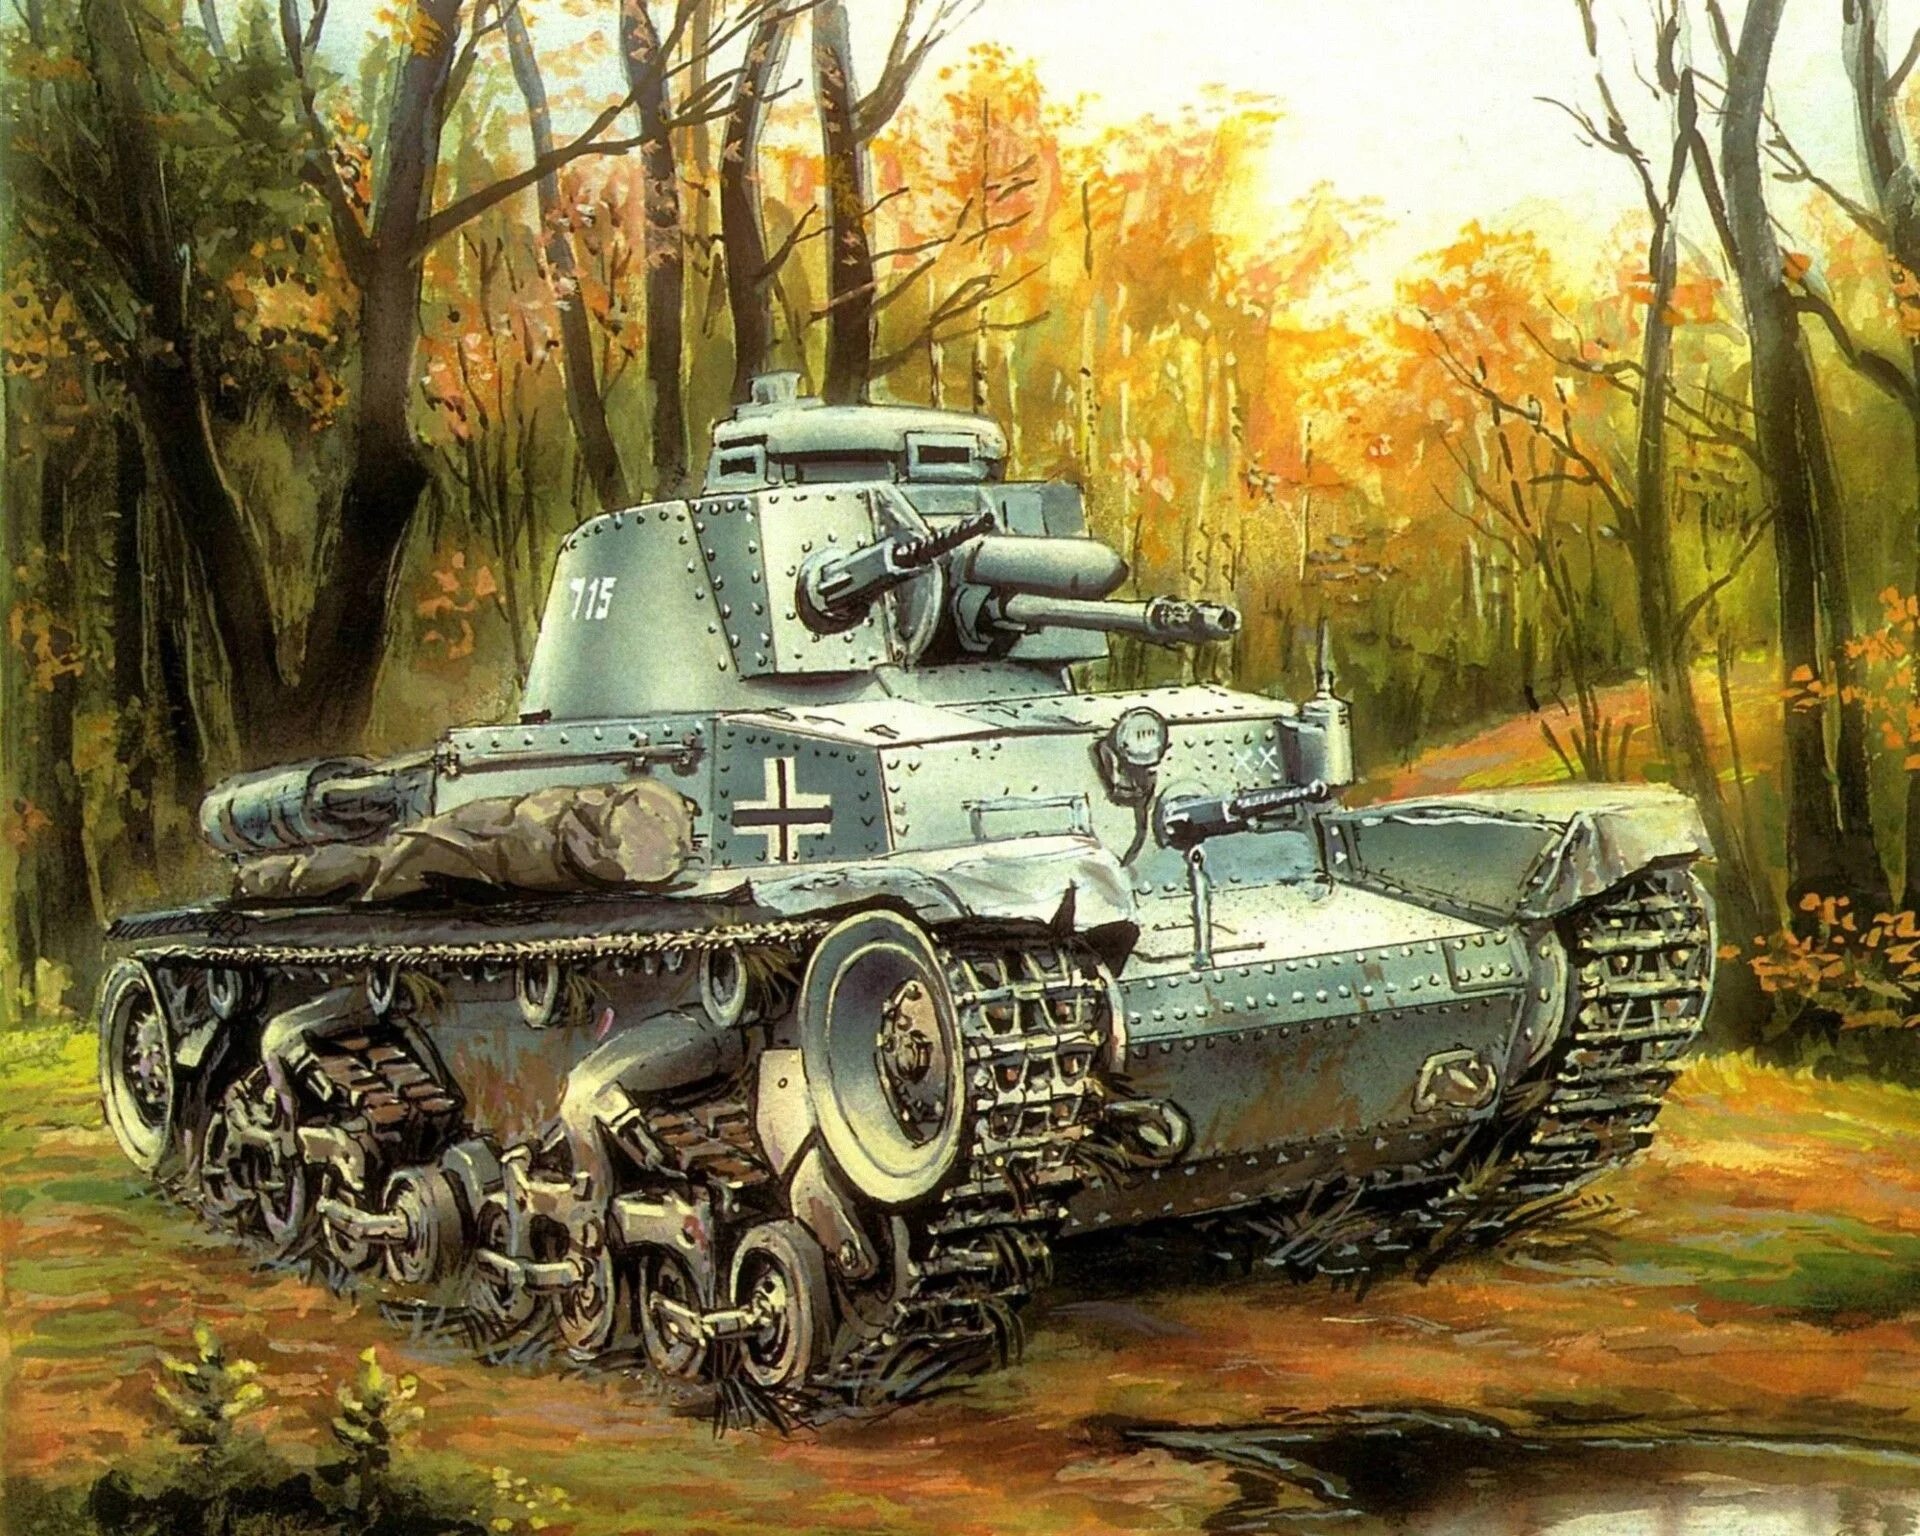 Pz kpfw t. PZ.Kpfw.35(t). PZ 35 T. Т-2 танк вермахта. Lt vz 35 (Panzer 35(t)).